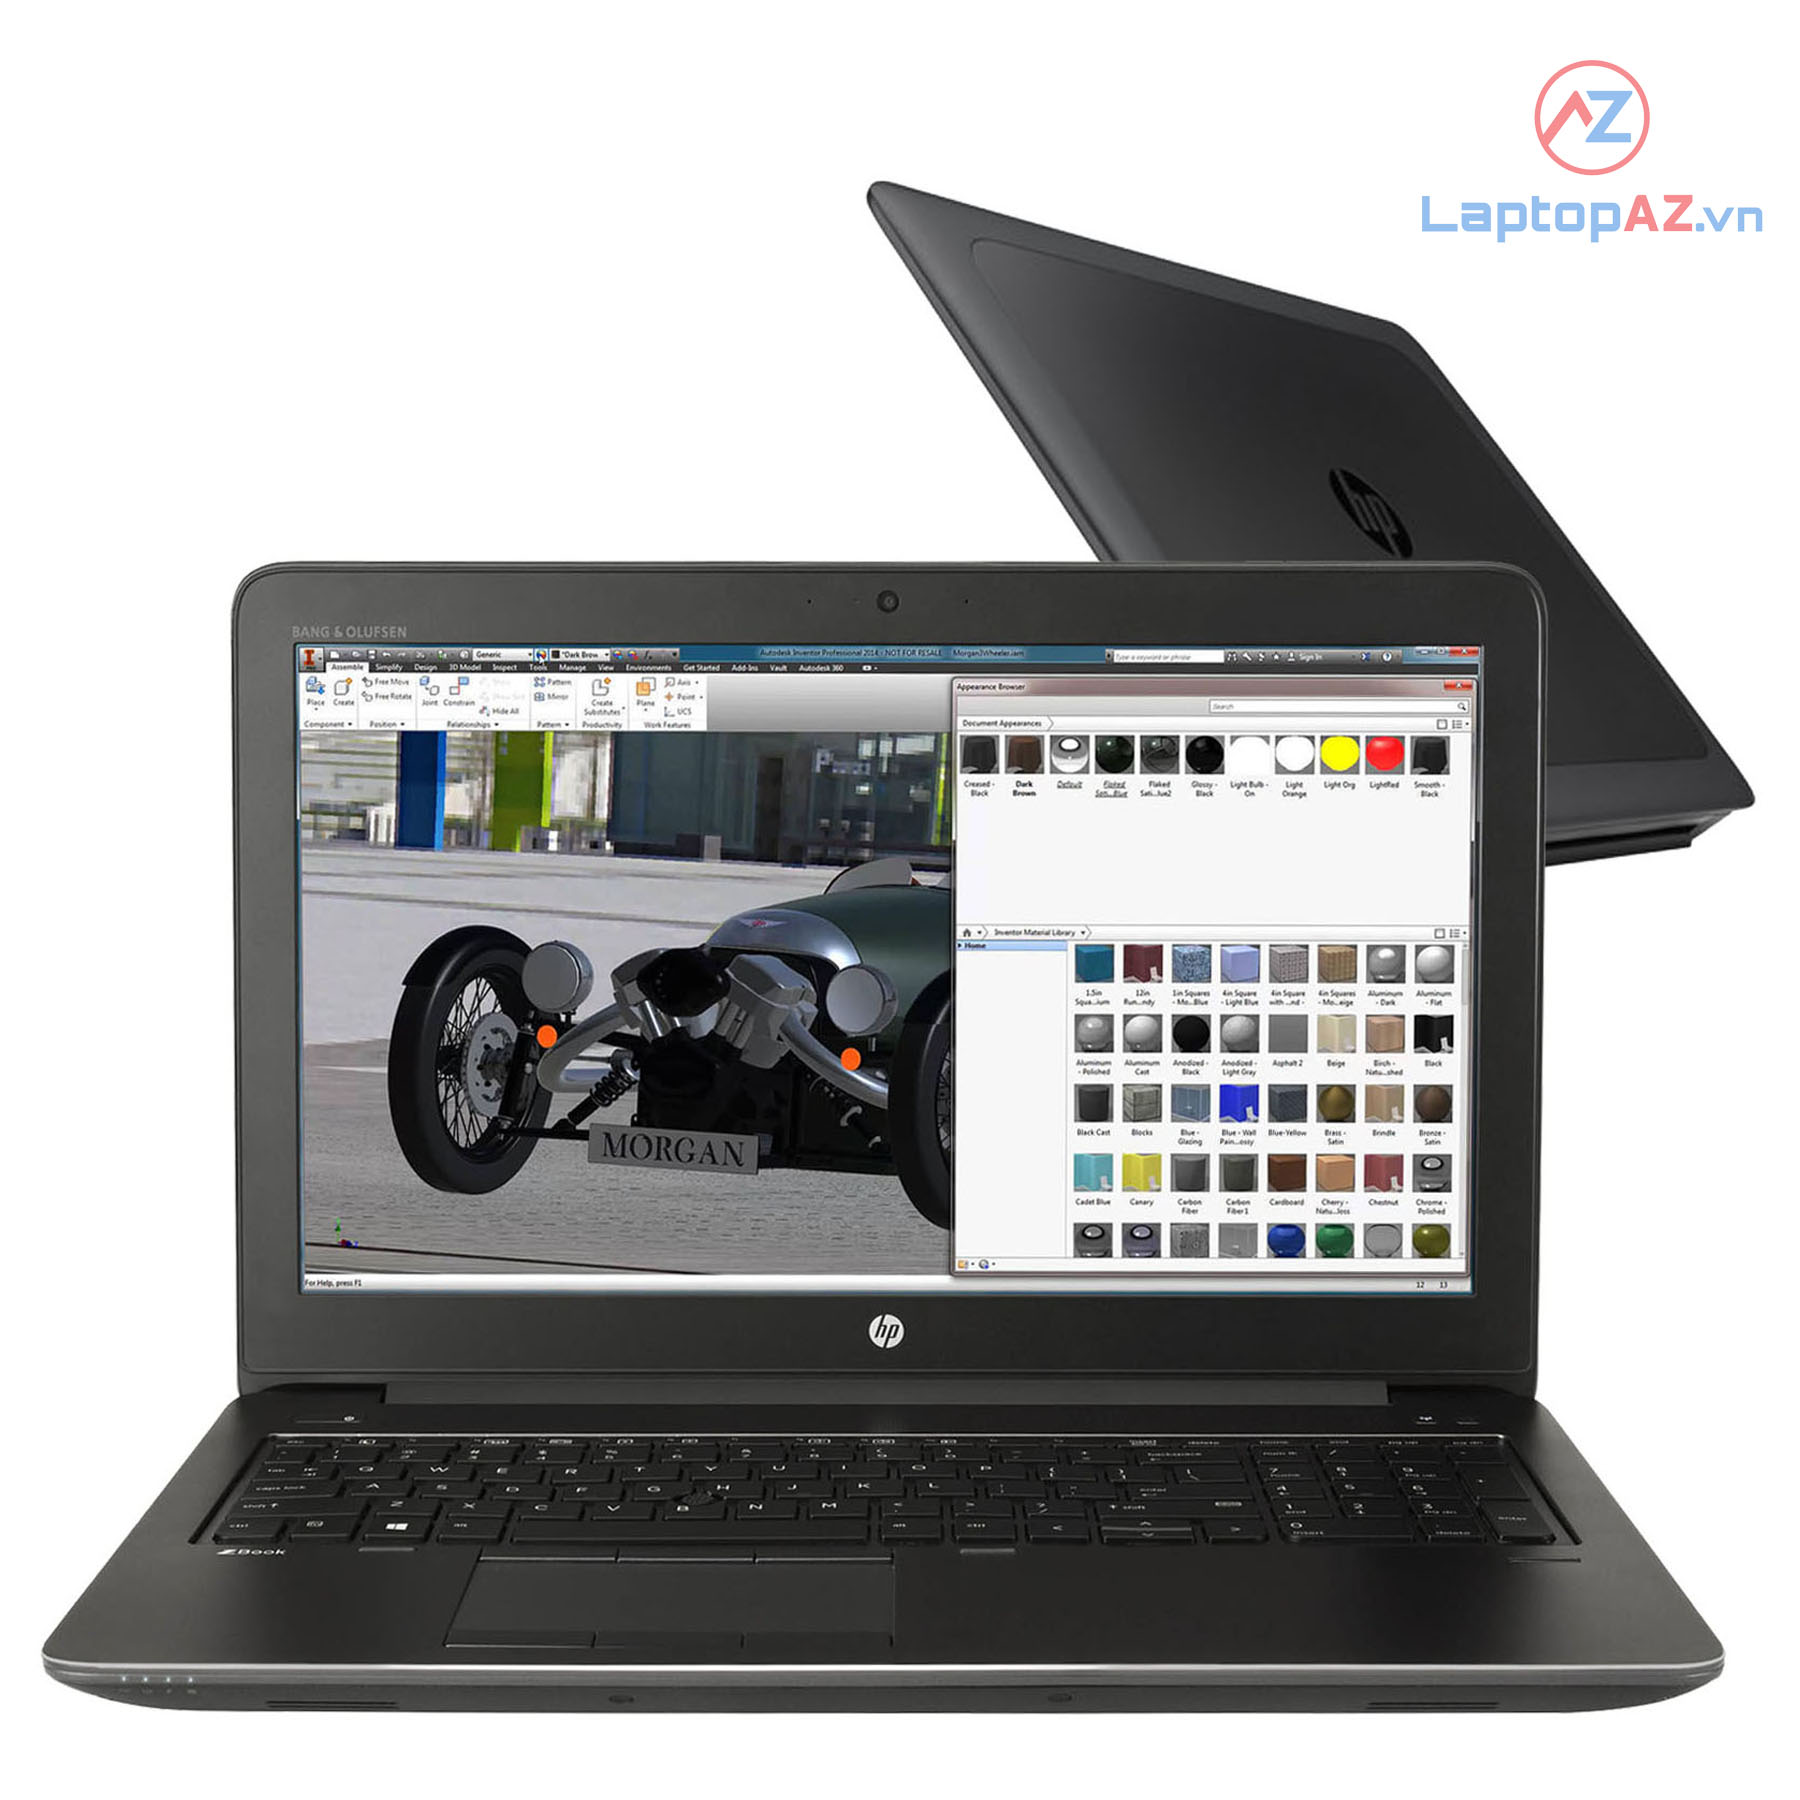 Laptop cũ HP ZBook Studio G4 (Core i7-7820HQ, 8GB, 256GB, VGA 4GB NVIDIA Quadro M1200, 15.6 inch FHD)